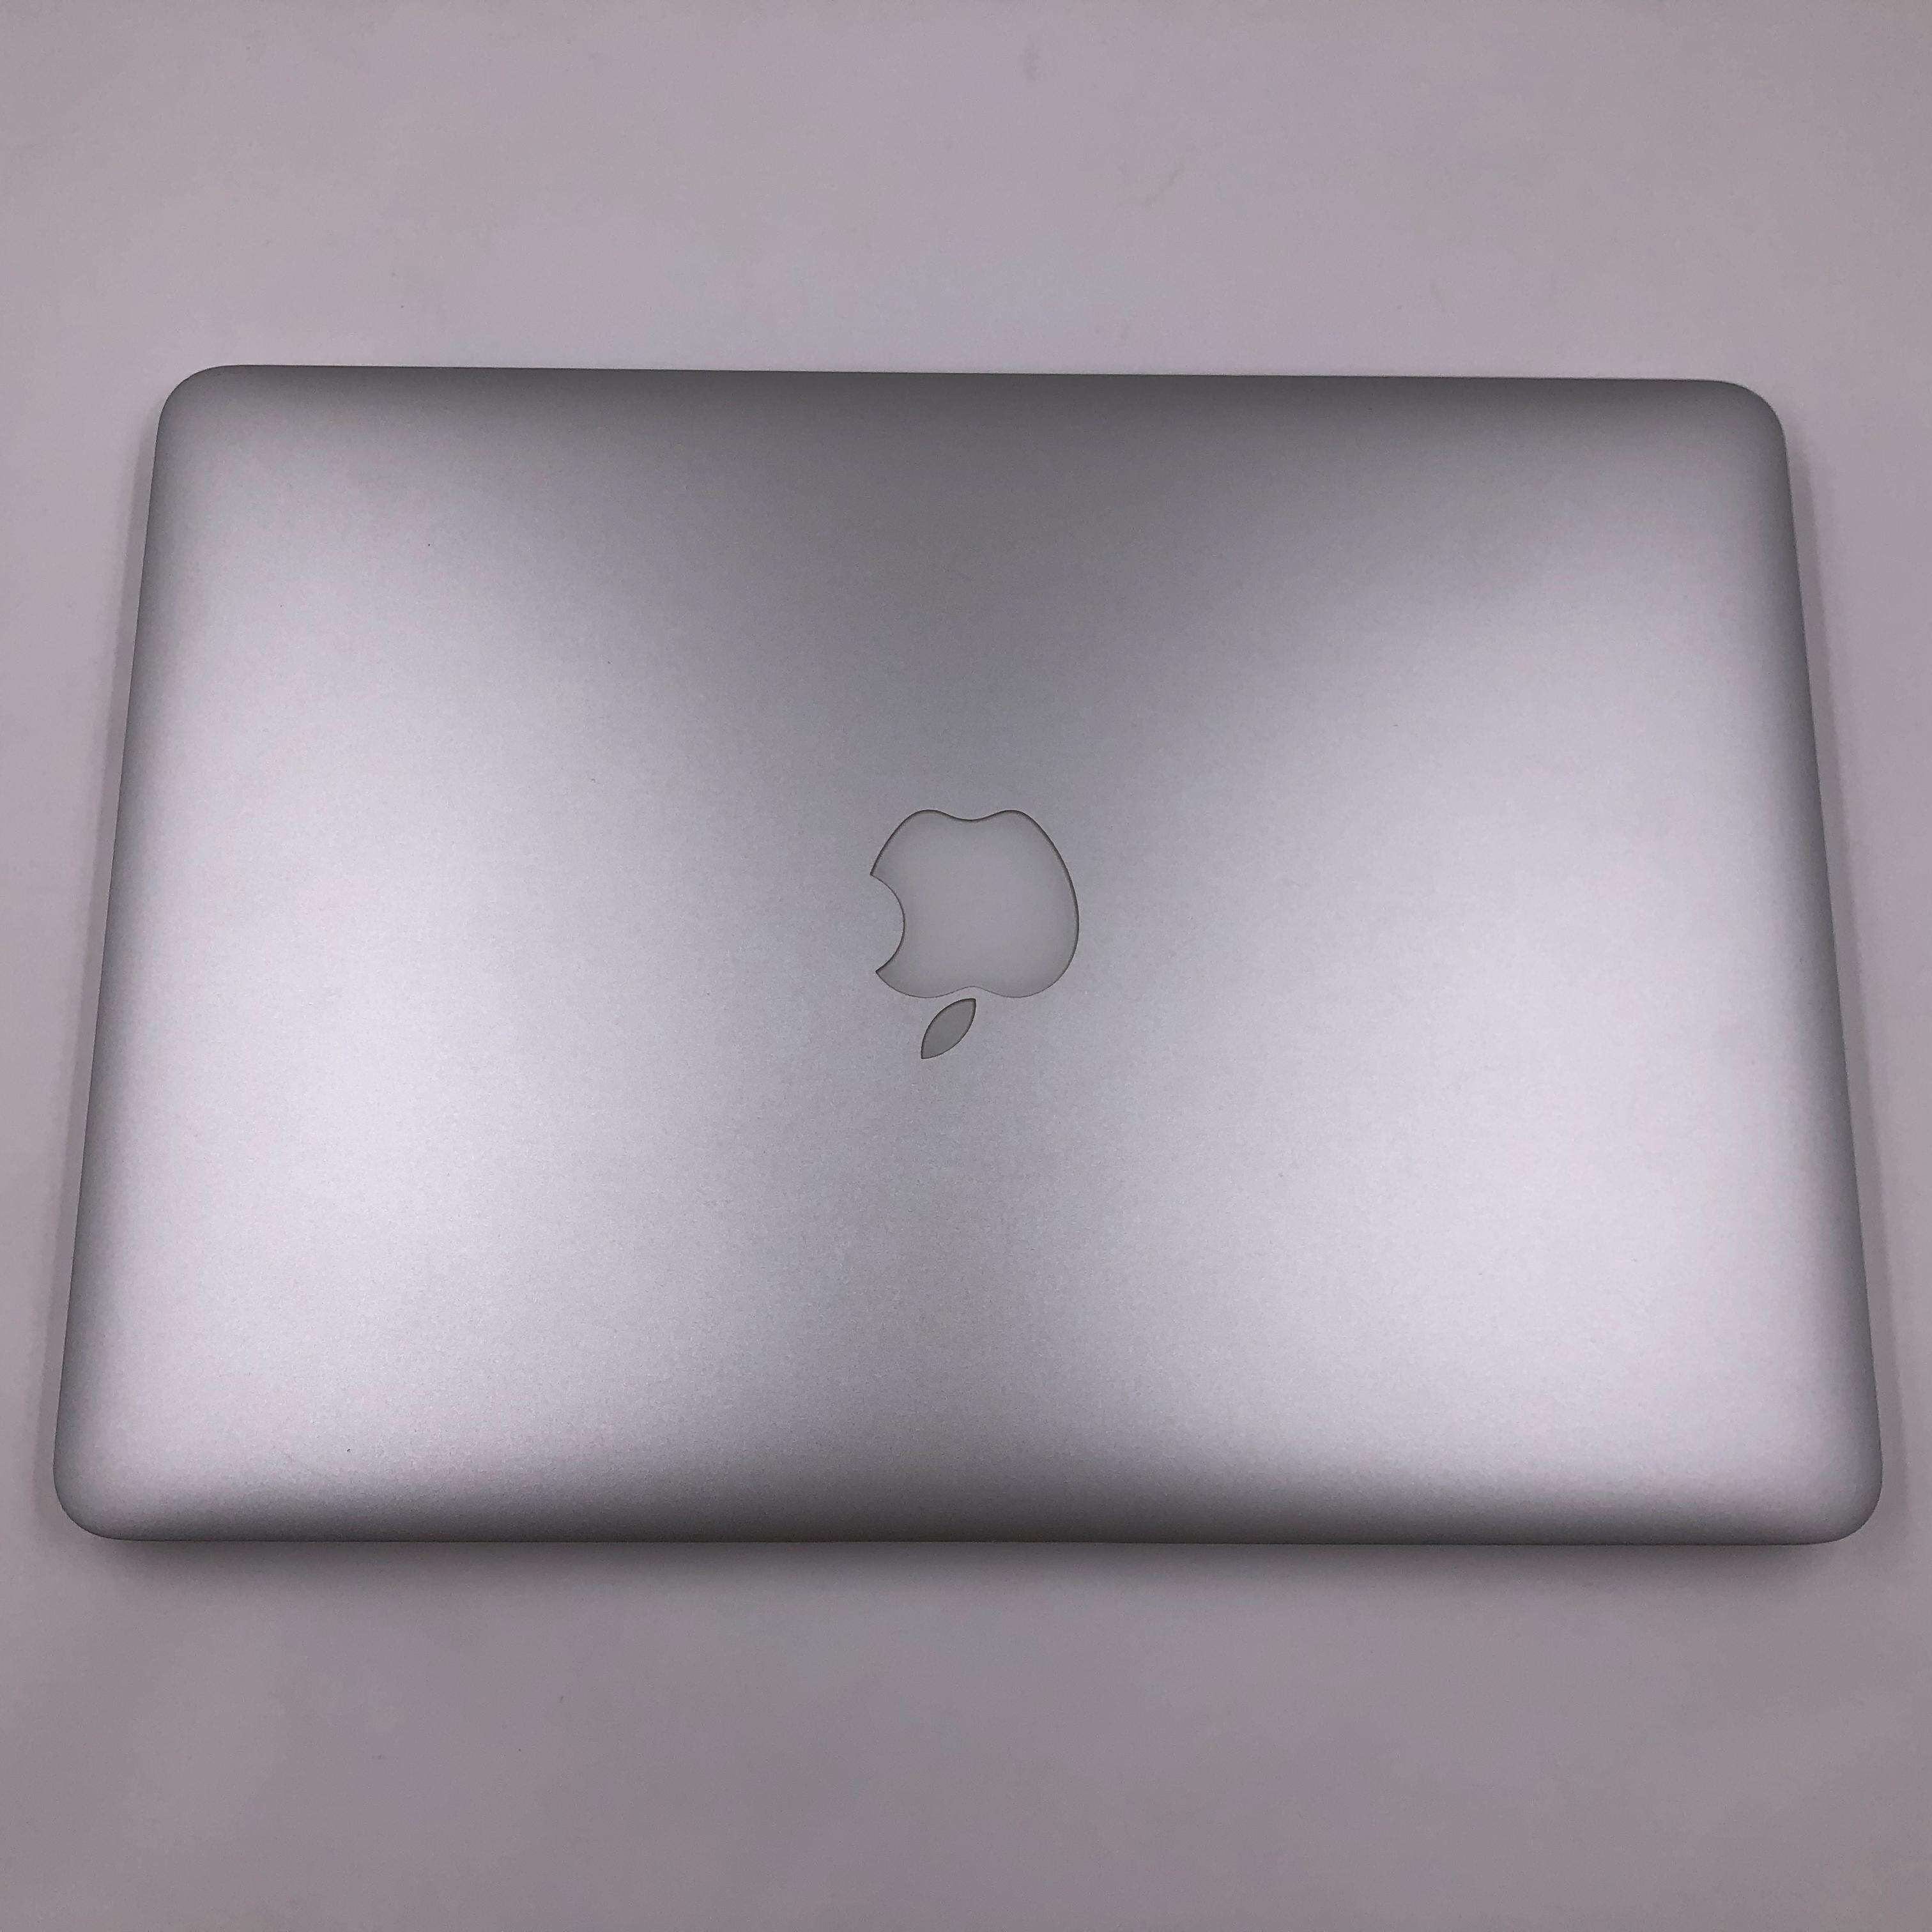 MacBook Pro (13",2013) 内存_4G/CPU_2.4 GHz Intel Core i5/硬盘_128G 国行